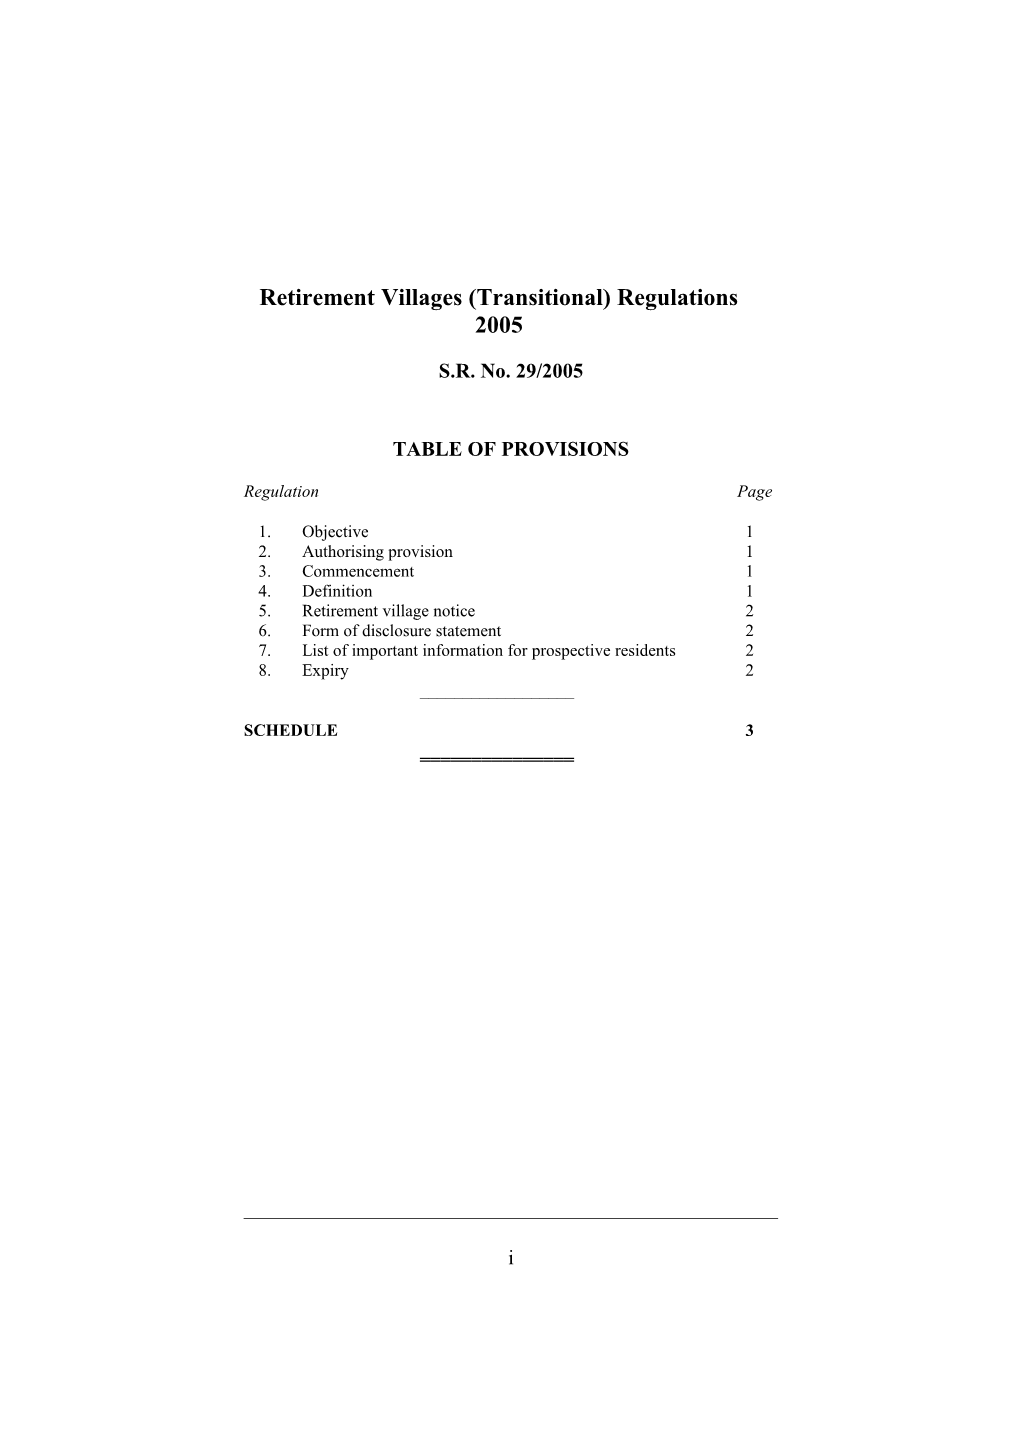 Retirement Villages (Transitional) Regulations 2005